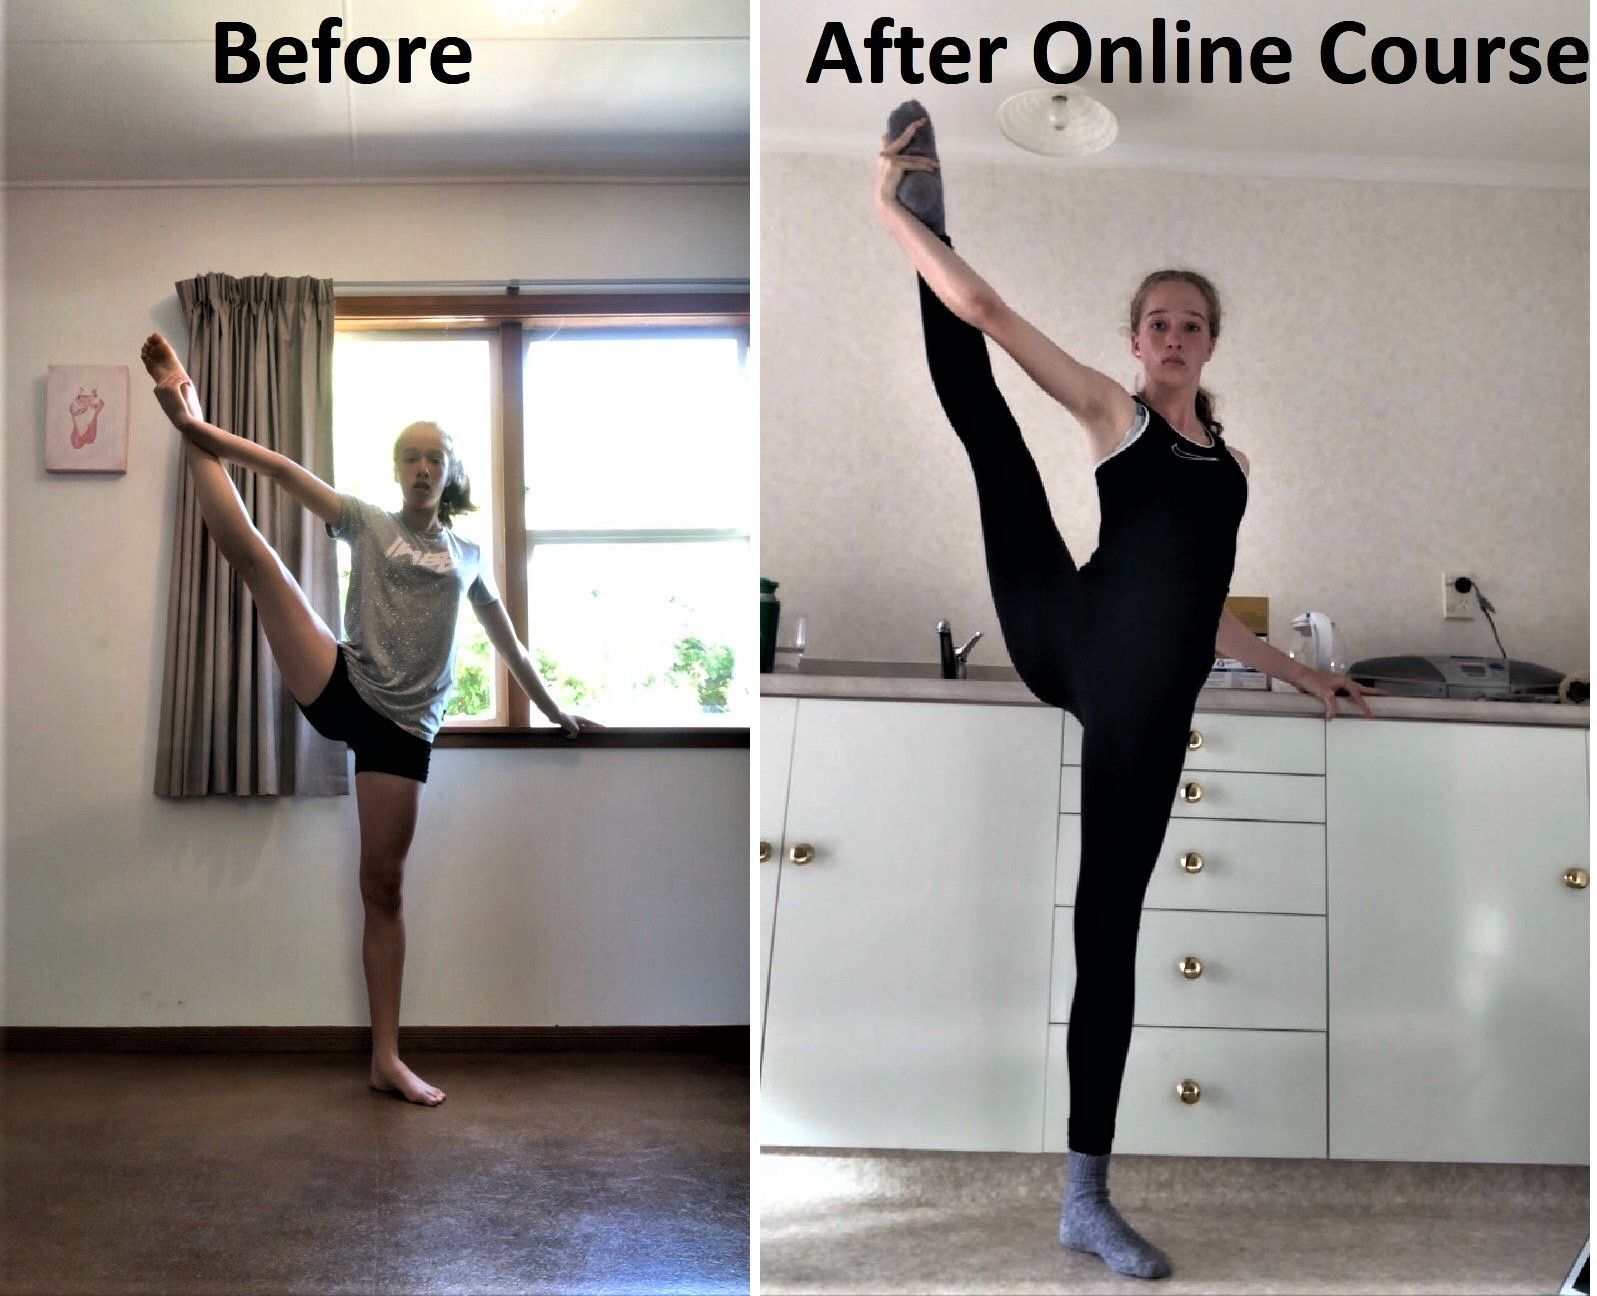 Dancer immediately increases flexibility and range of motion testimonial photo 